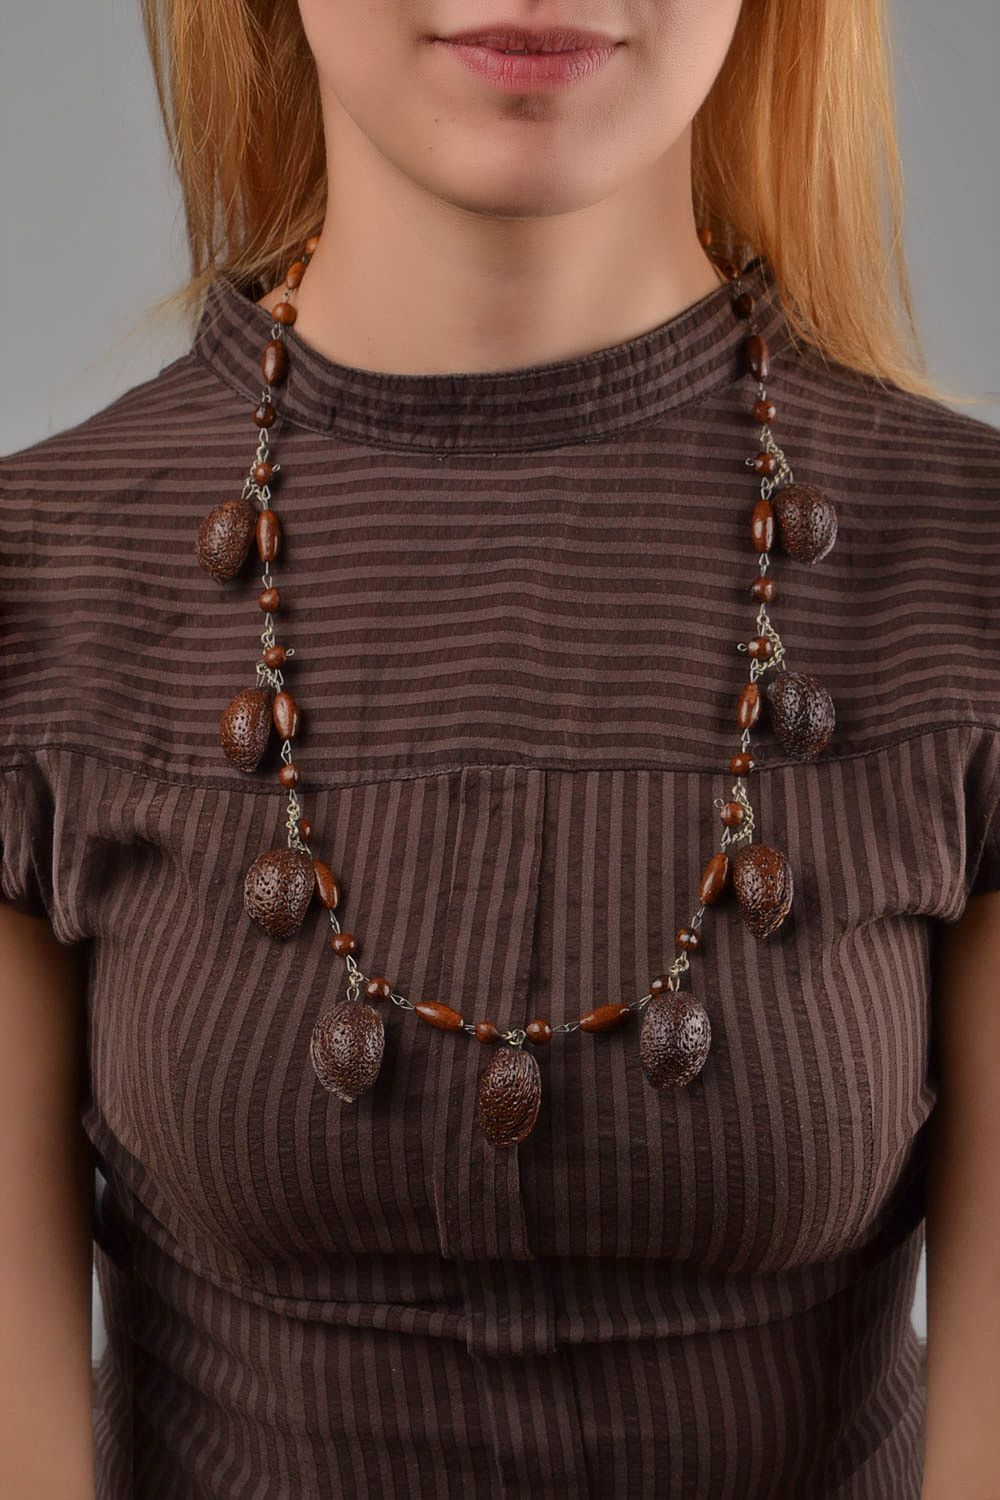 Stylish handmade necklace botanical jewelry for women fashion accessories photo 1